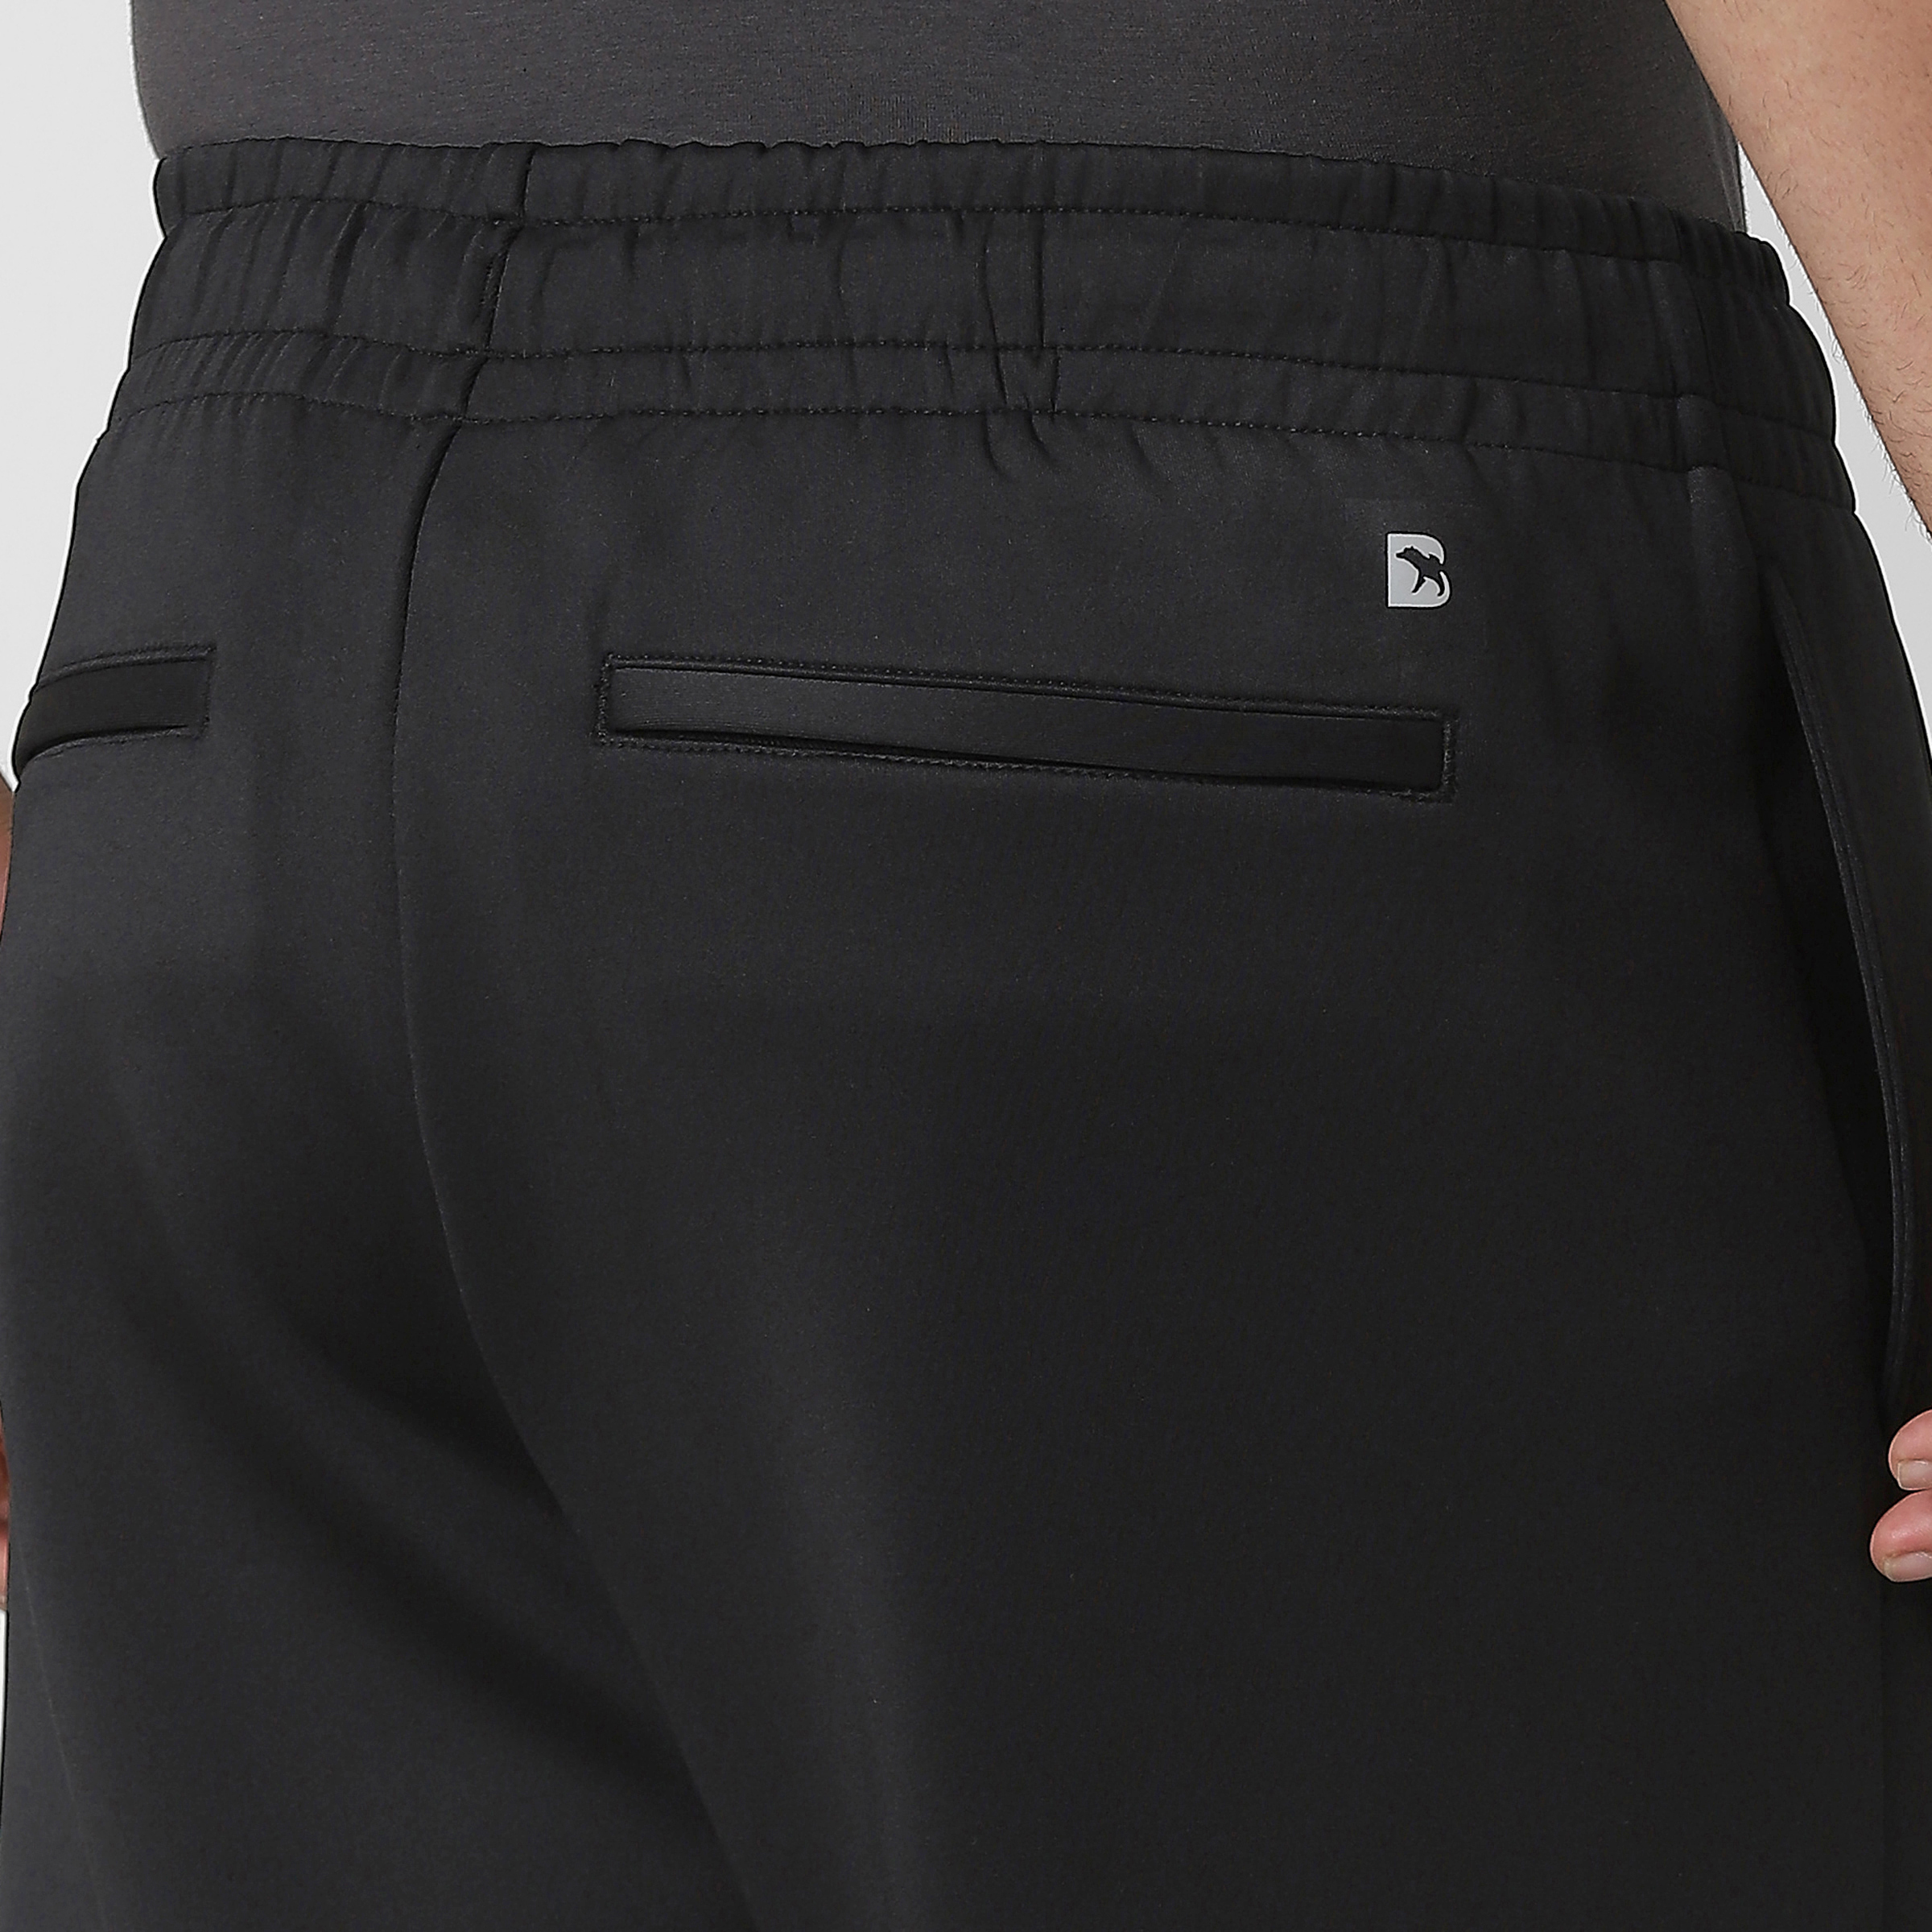 Scuba Jogger Black close up back zipper pockets on model